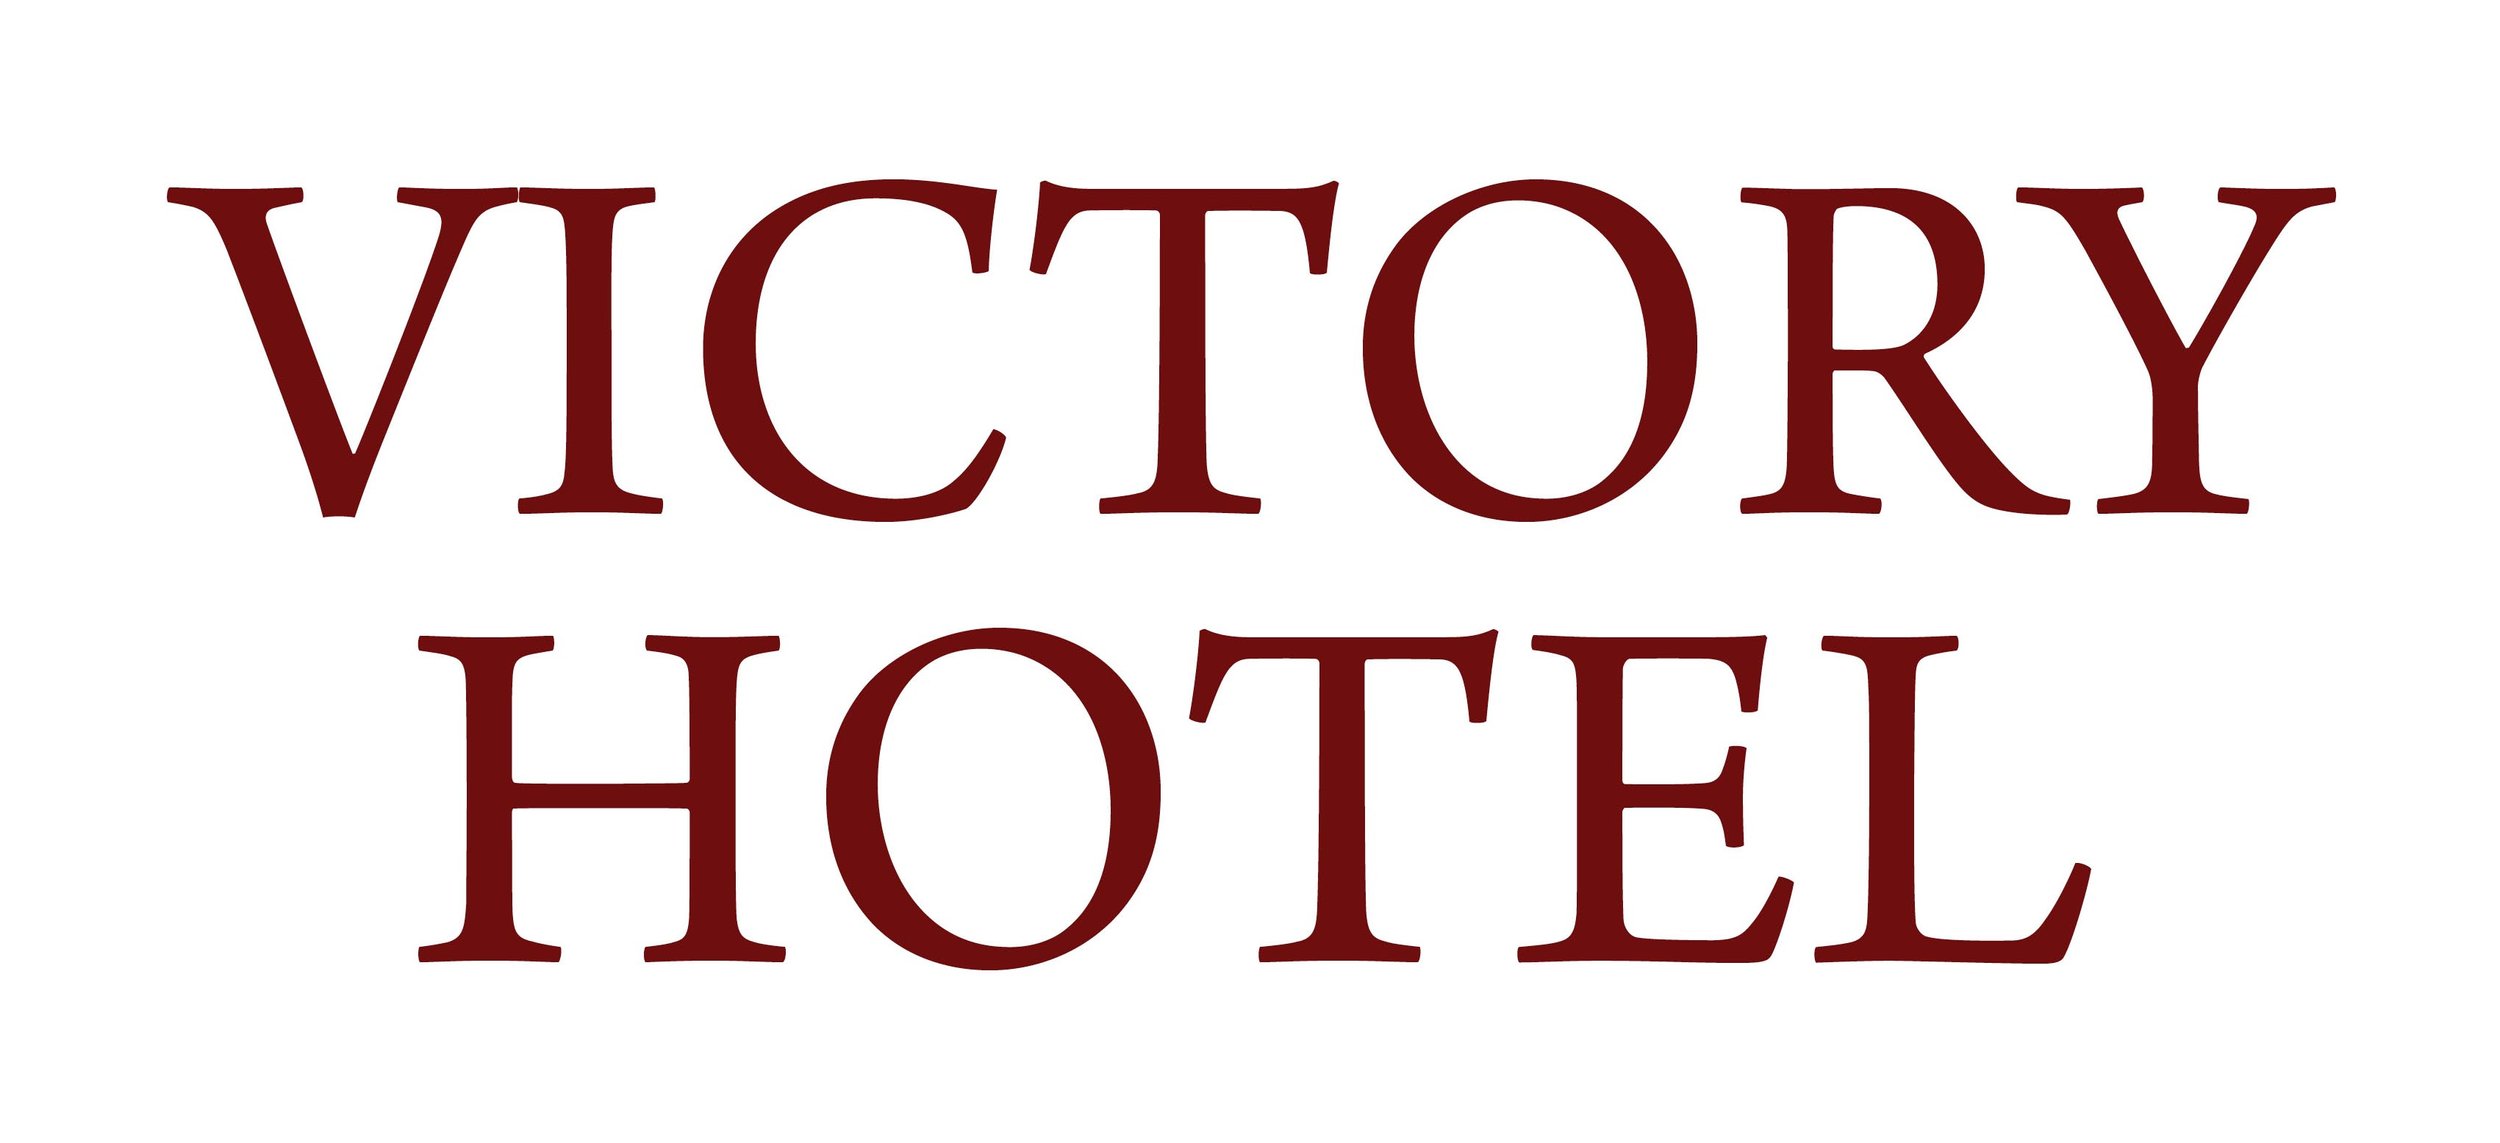 Victory Hotel Logo.jpg